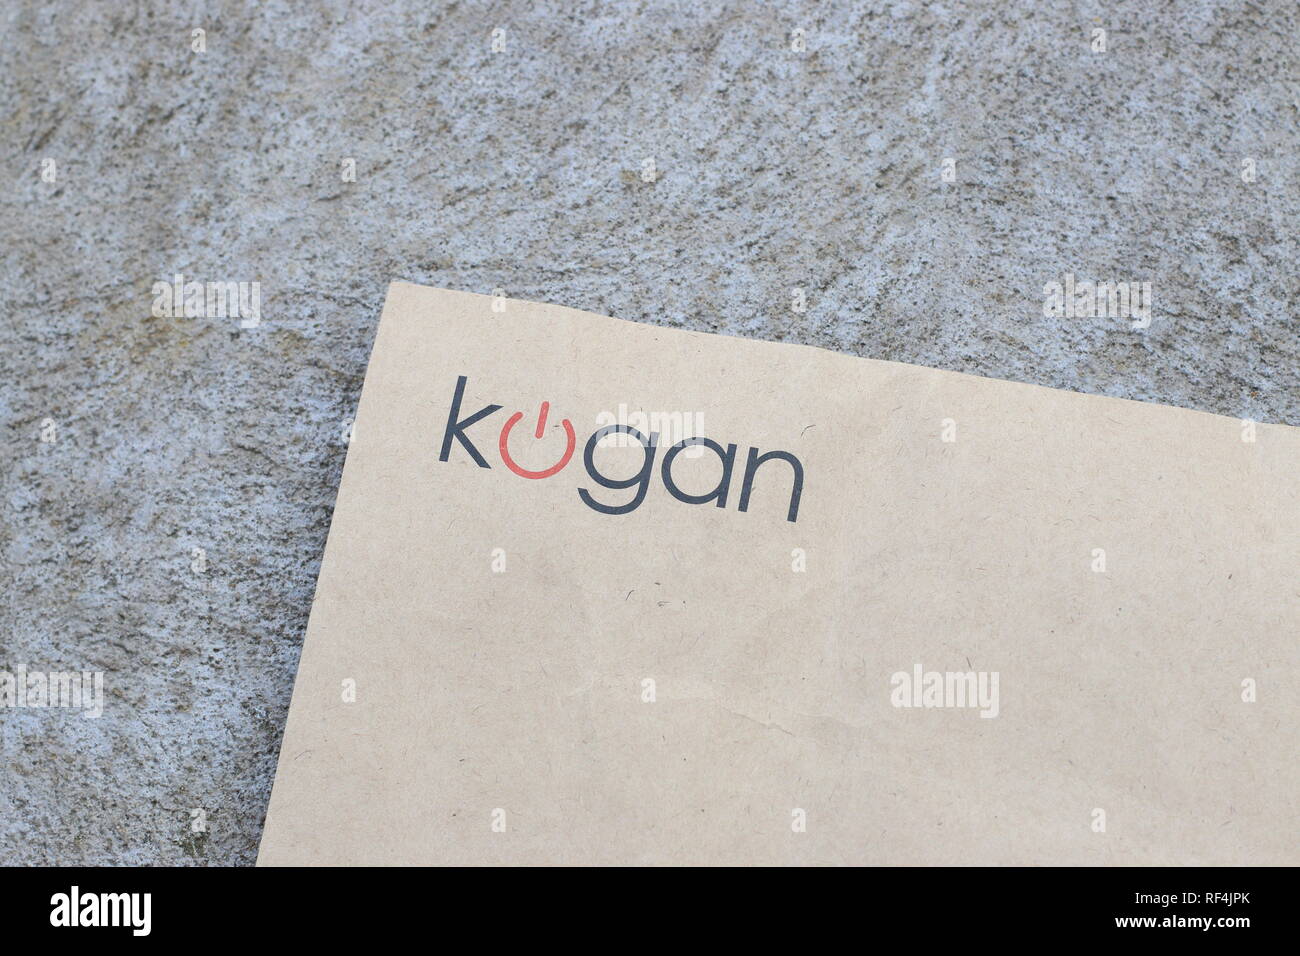 Kogan - Australian retail business Stock Photo